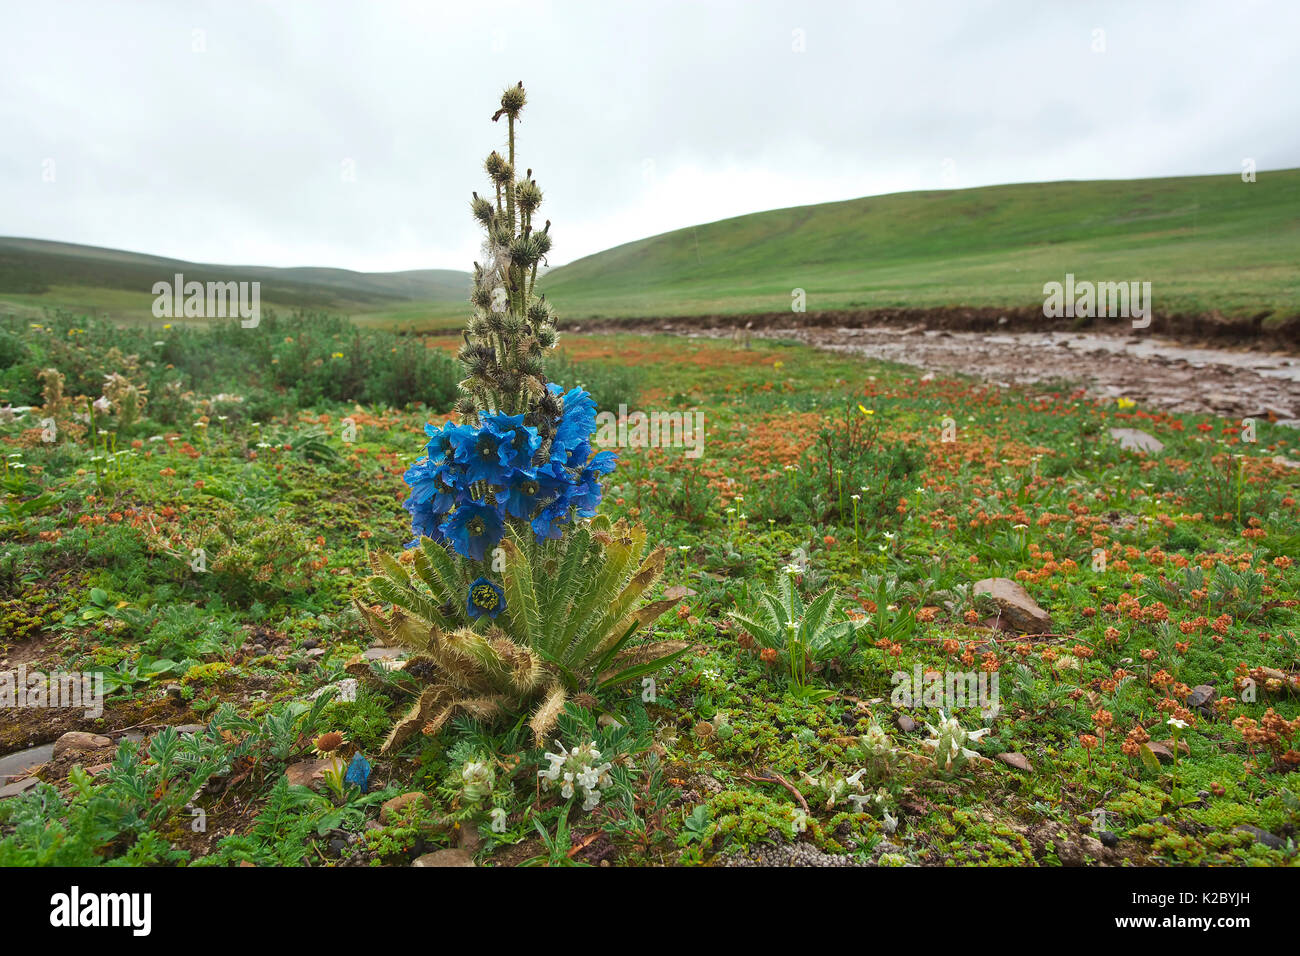 Prickly blue poppy (Meconopsis horridula ) Serxu, Shiqu county, Sichuan Province, Qinghai-Tibet Plateau, China. Stock Photo